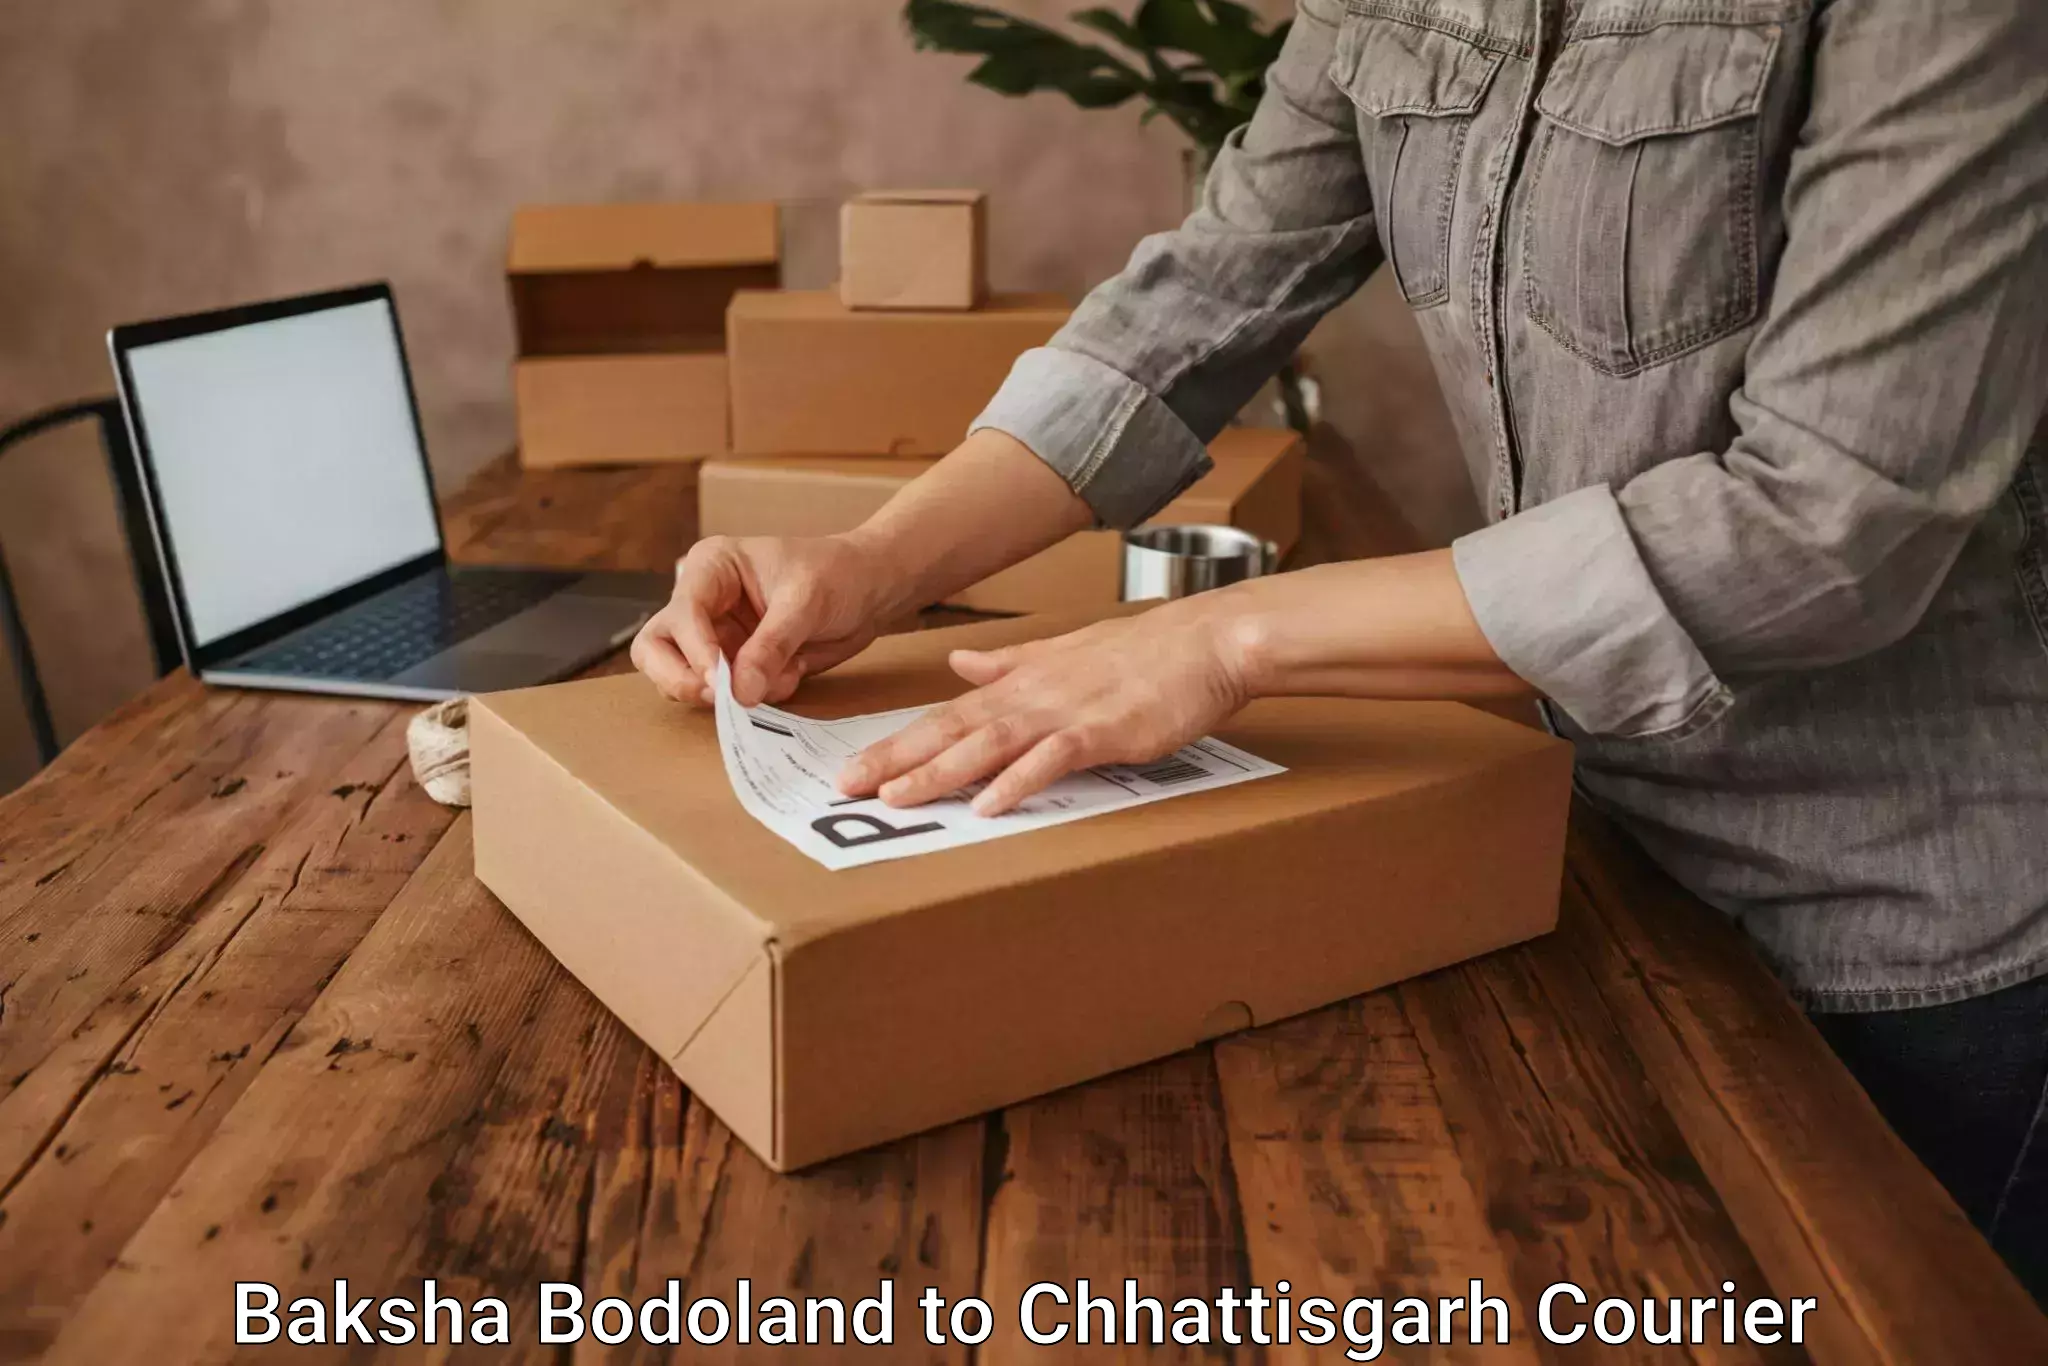 Courier service booking Baksha Bodoland to Patna Chhattisgarh